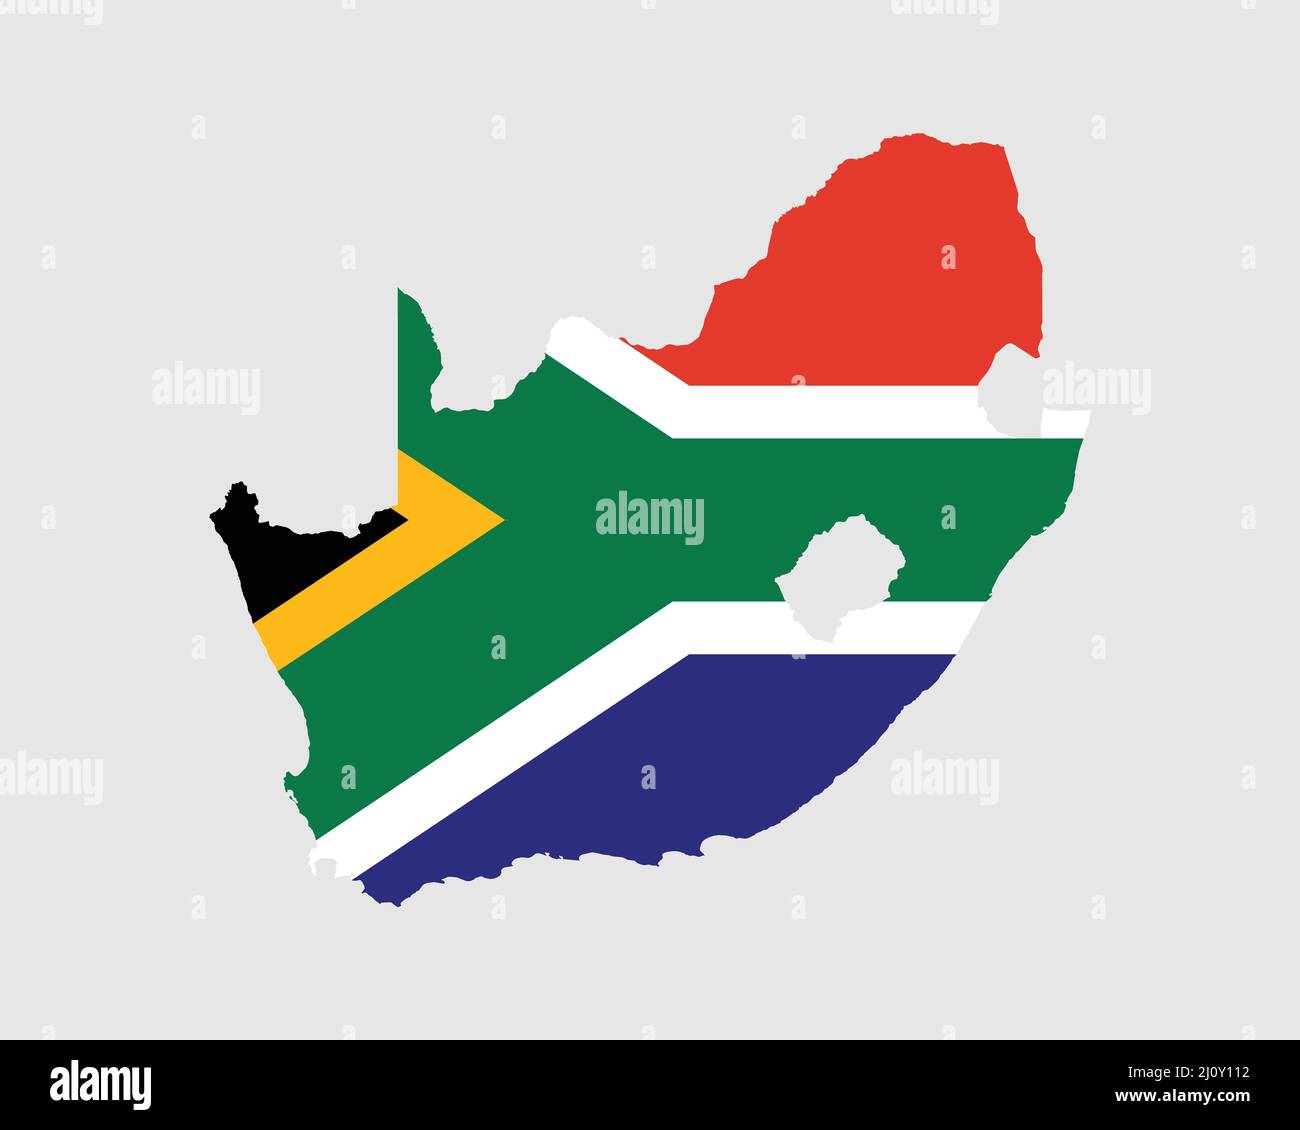 Südafrika Flagge Karte. Karte der Republik Südafrika mit dem südafrikanischen Länderbanner. Vektorgrafik. Stock Vektor